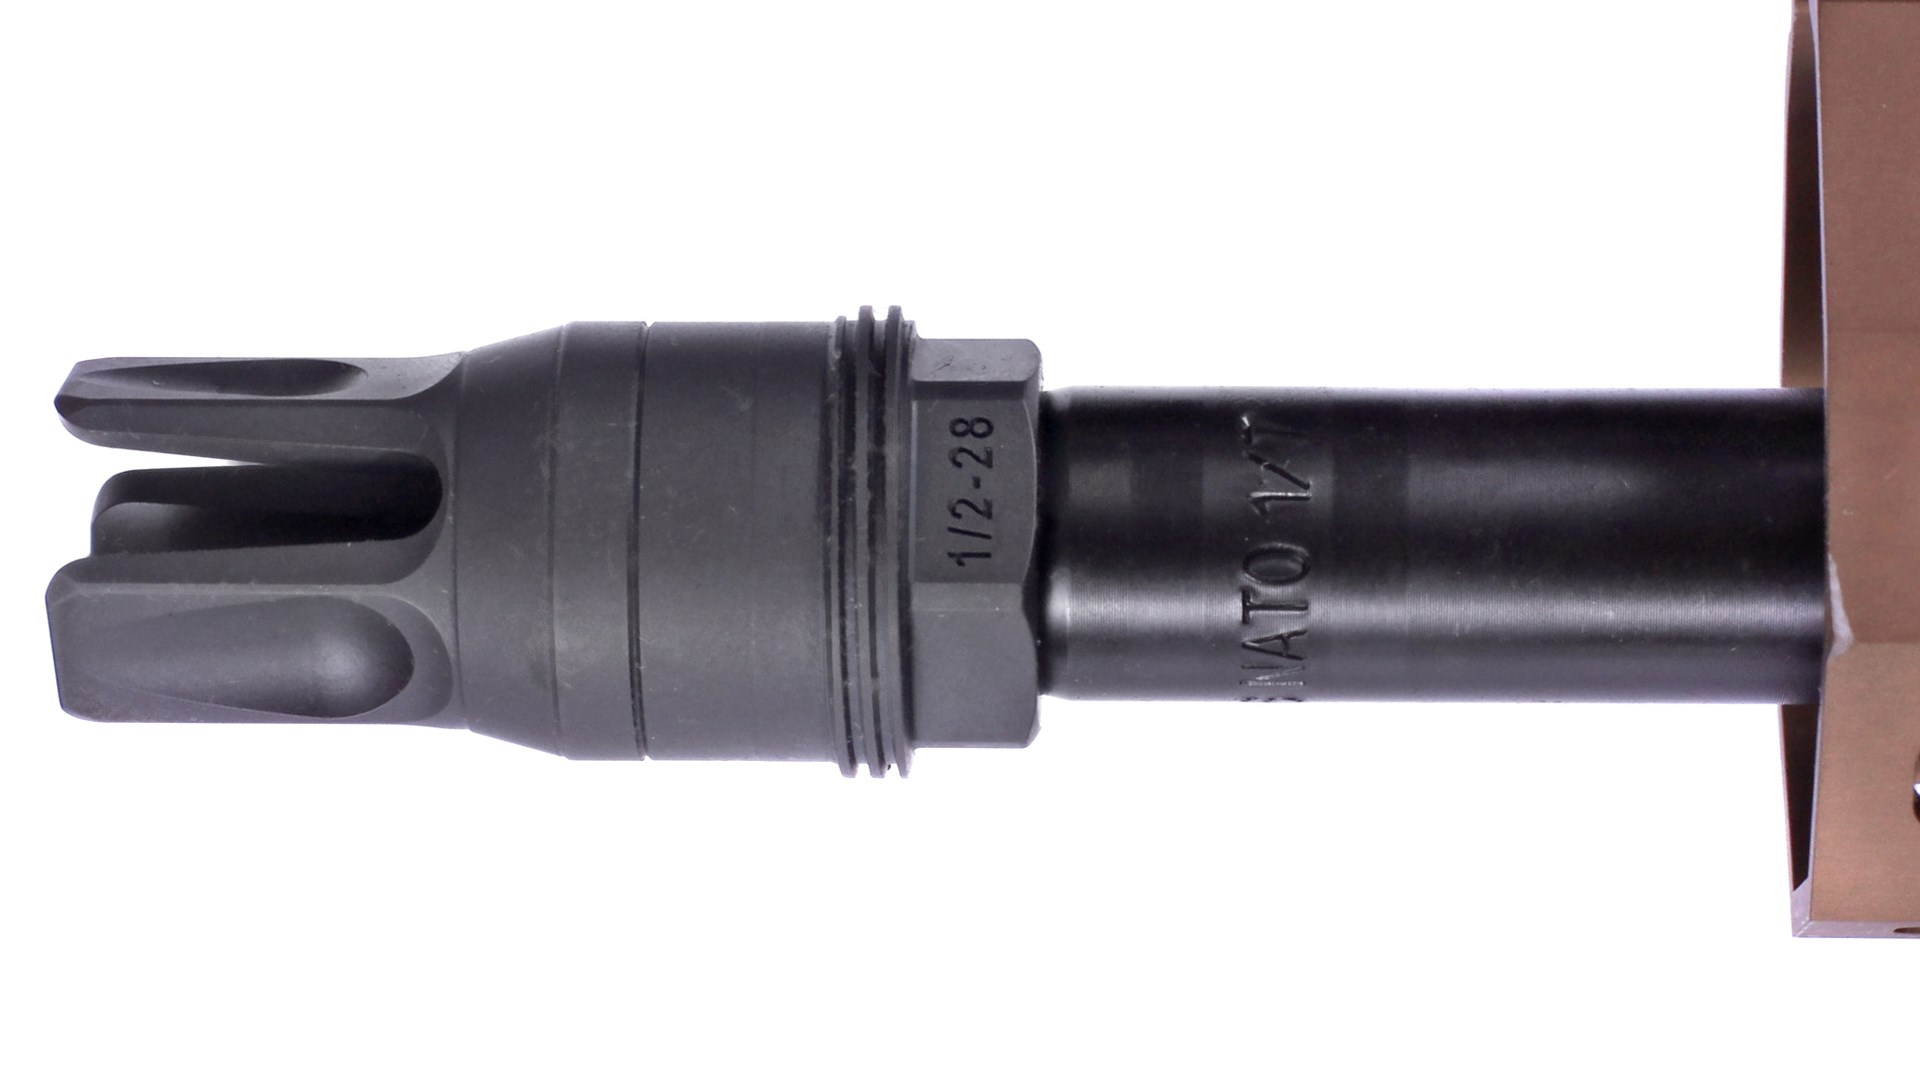 muzzle device and barrel assembly of sig sauer mcx spear lt rifle carbine gun parts closeup detail